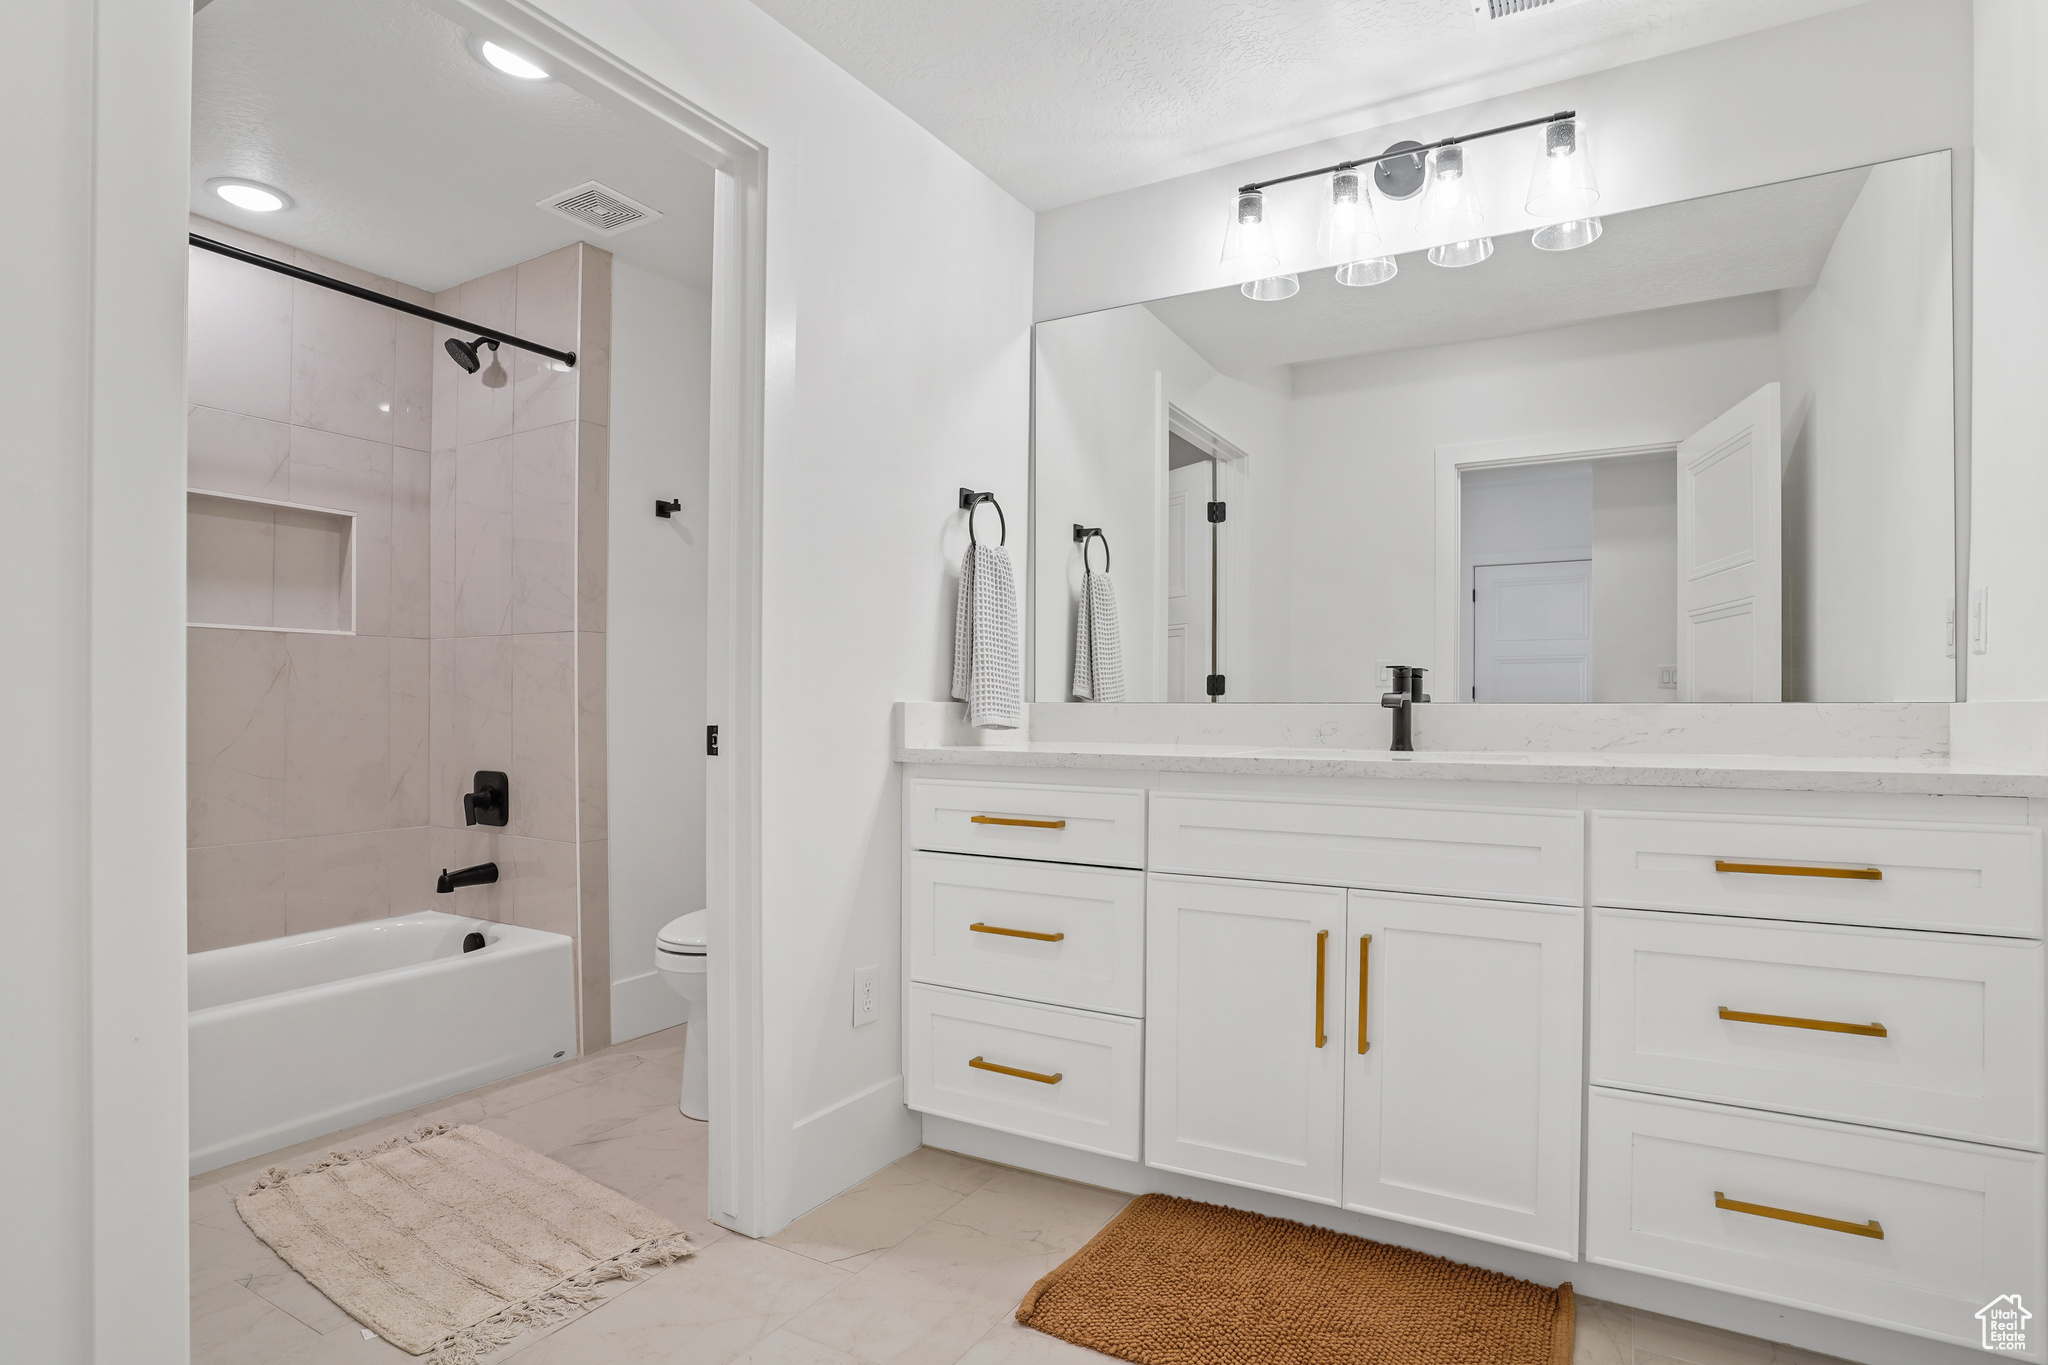 Full bathroom with tile flooring, tiled shower / bath combo, vanity, and toilet